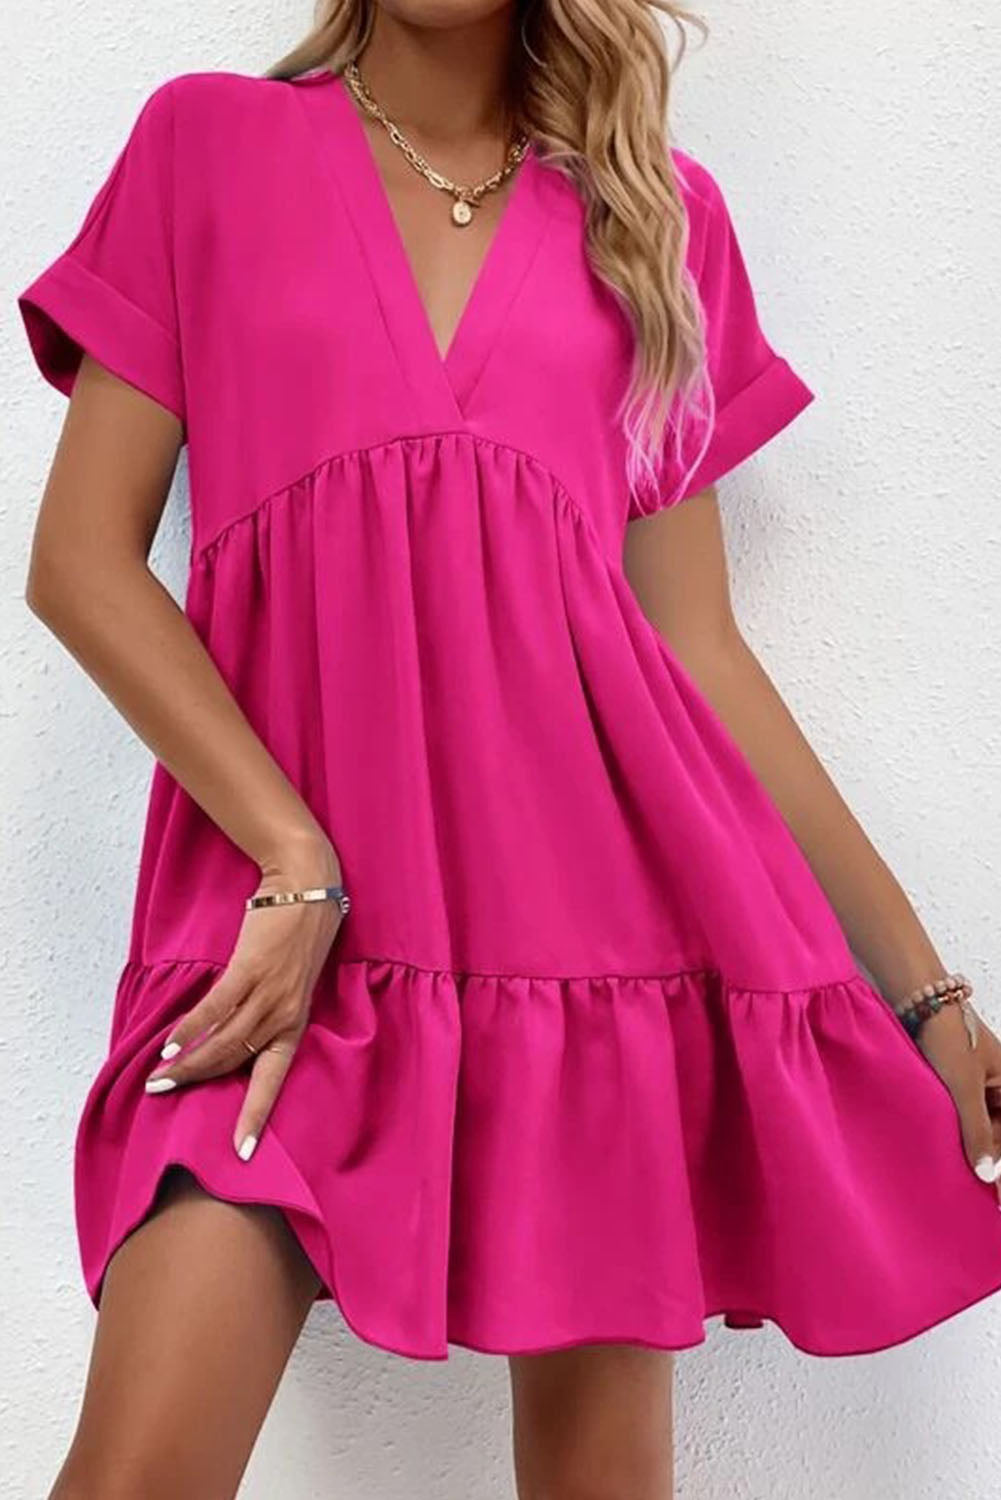 Rose Fresh and sweet V-neck solid color large swing casual skirt dress Mini Dresses JT's Designer Fashion